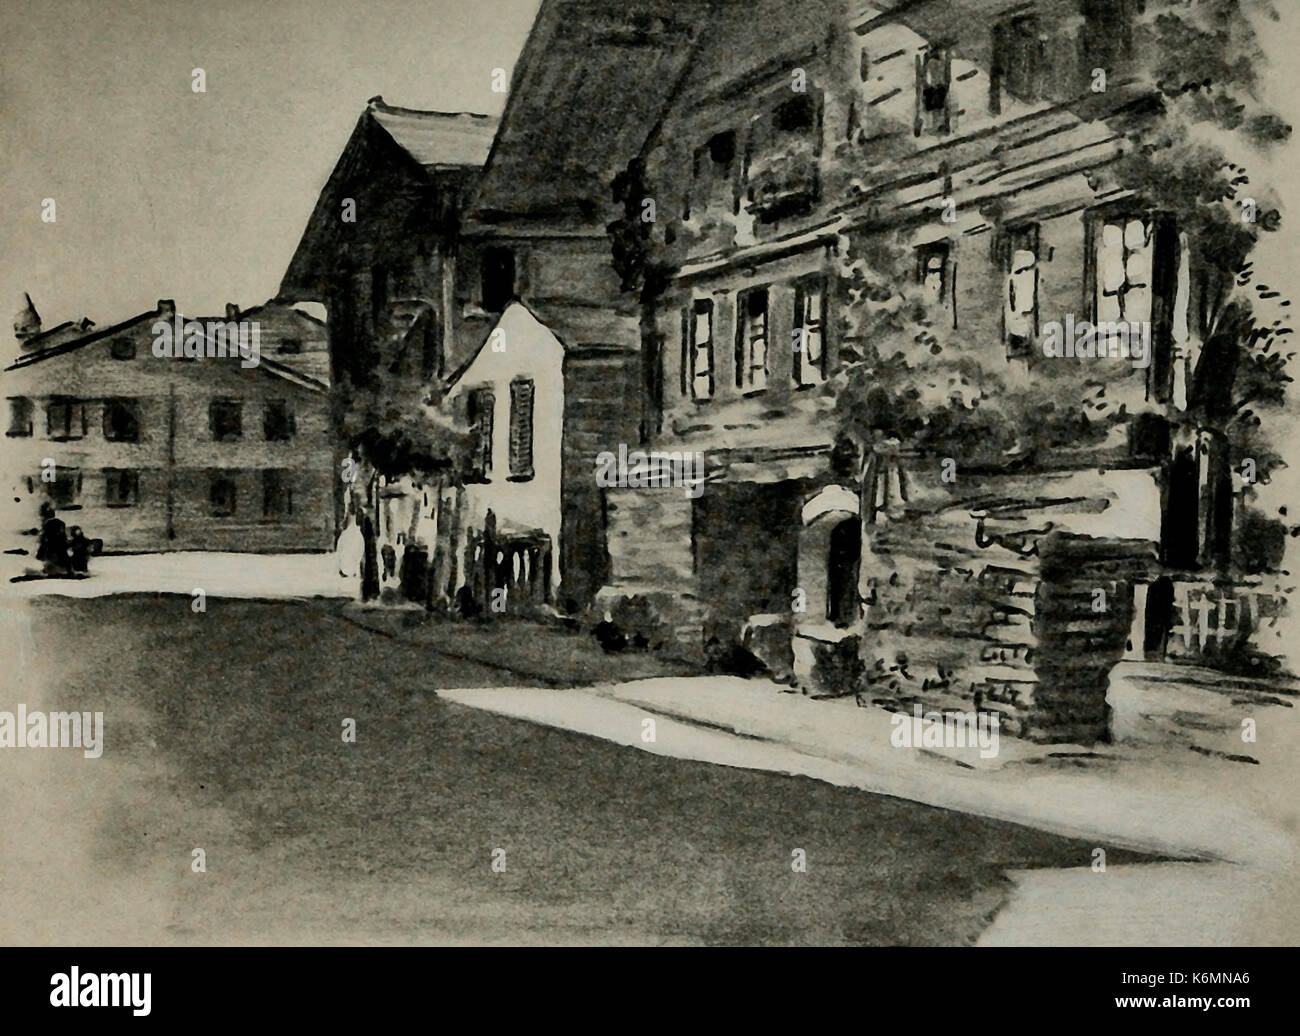 Interlaken, Suisse, vers 1900 Banque D'Images